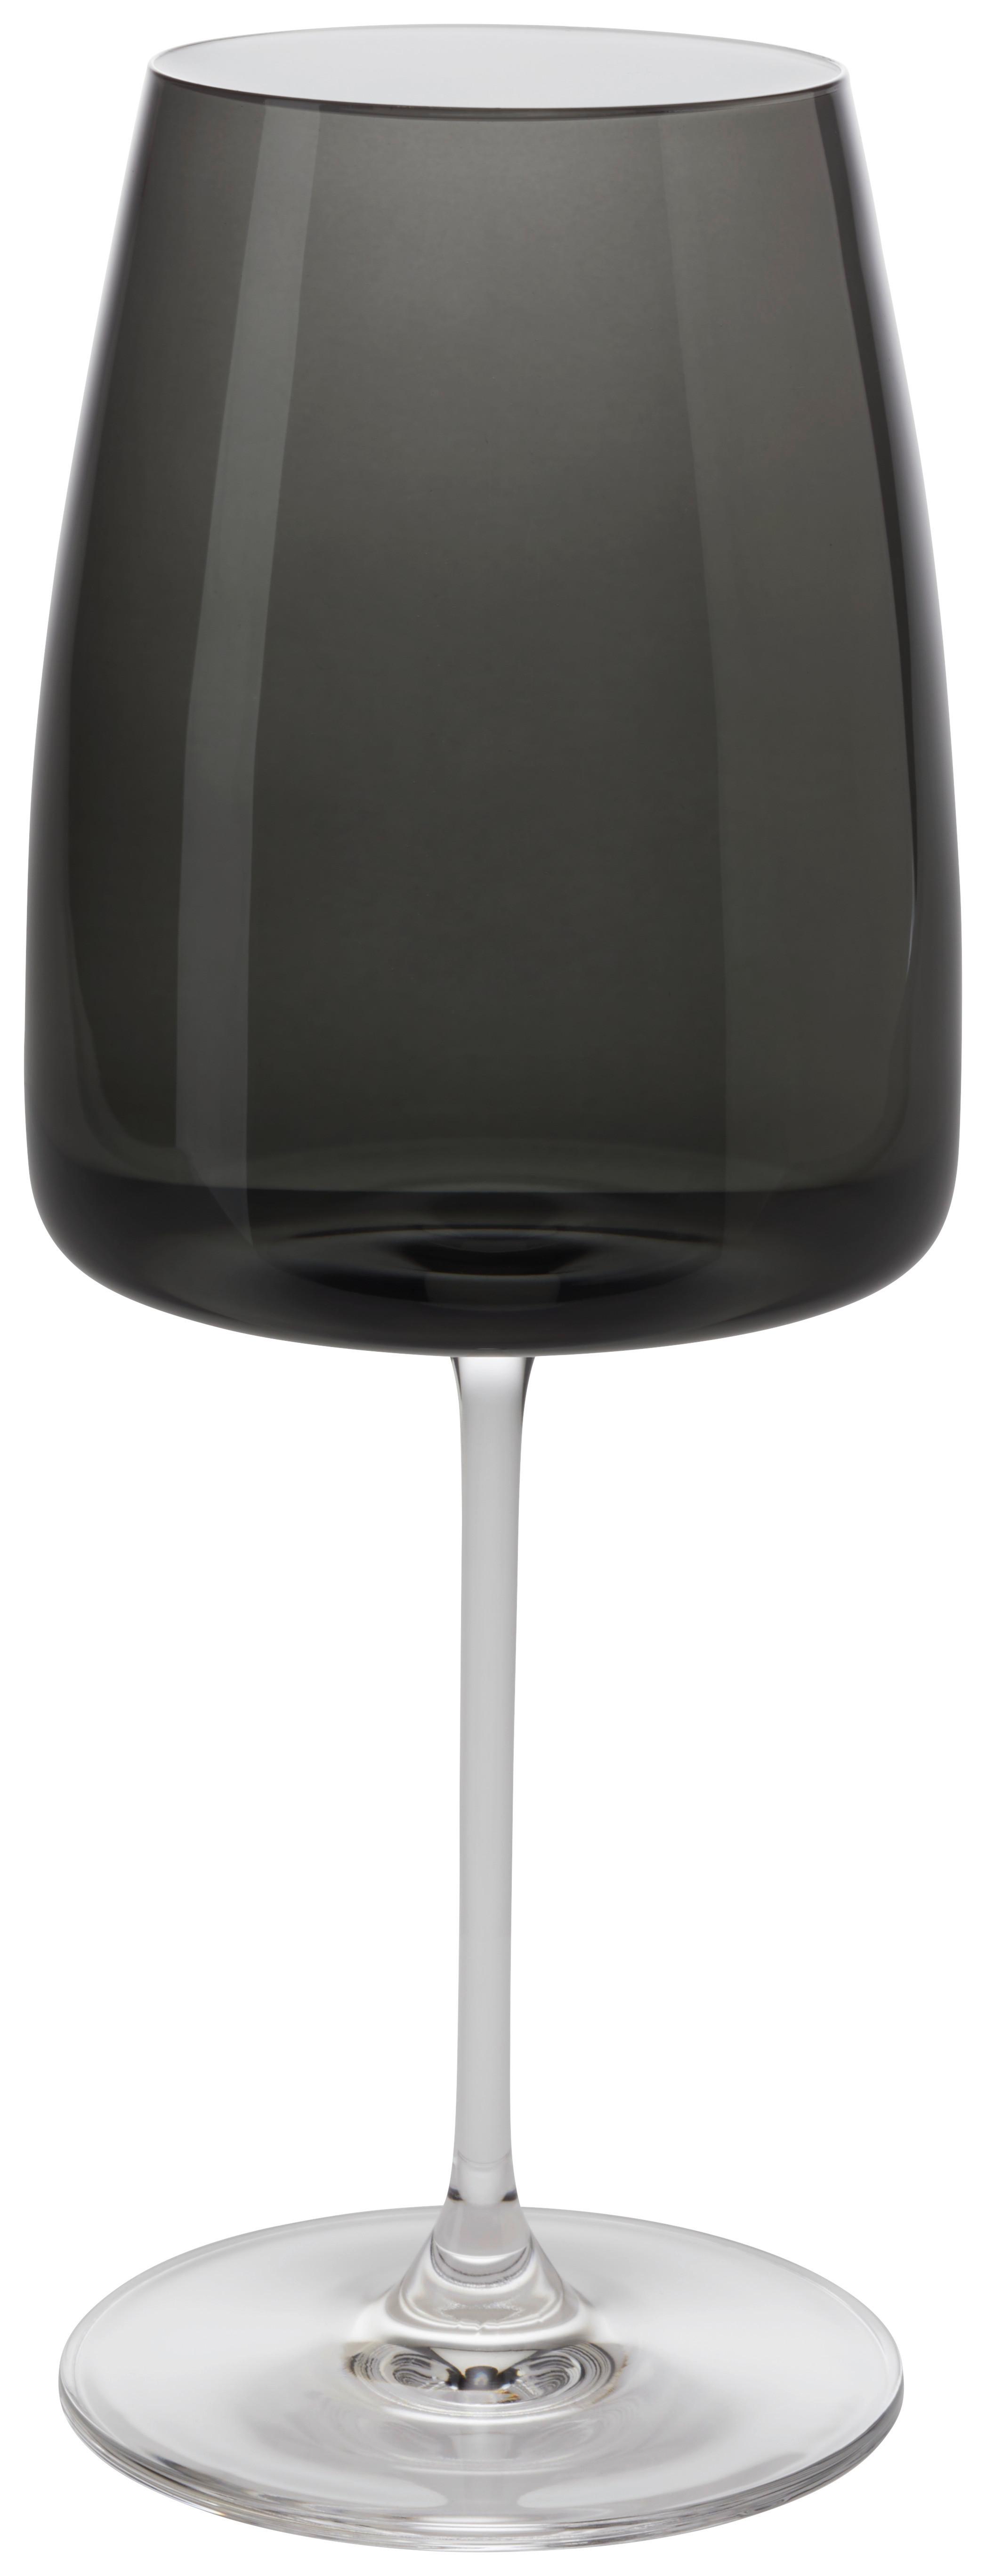 Bordeauxglas Nicki in Schwarz ca. 670ml - Schwarz, Modern, Glas (9,4/24cm) - Premium Living